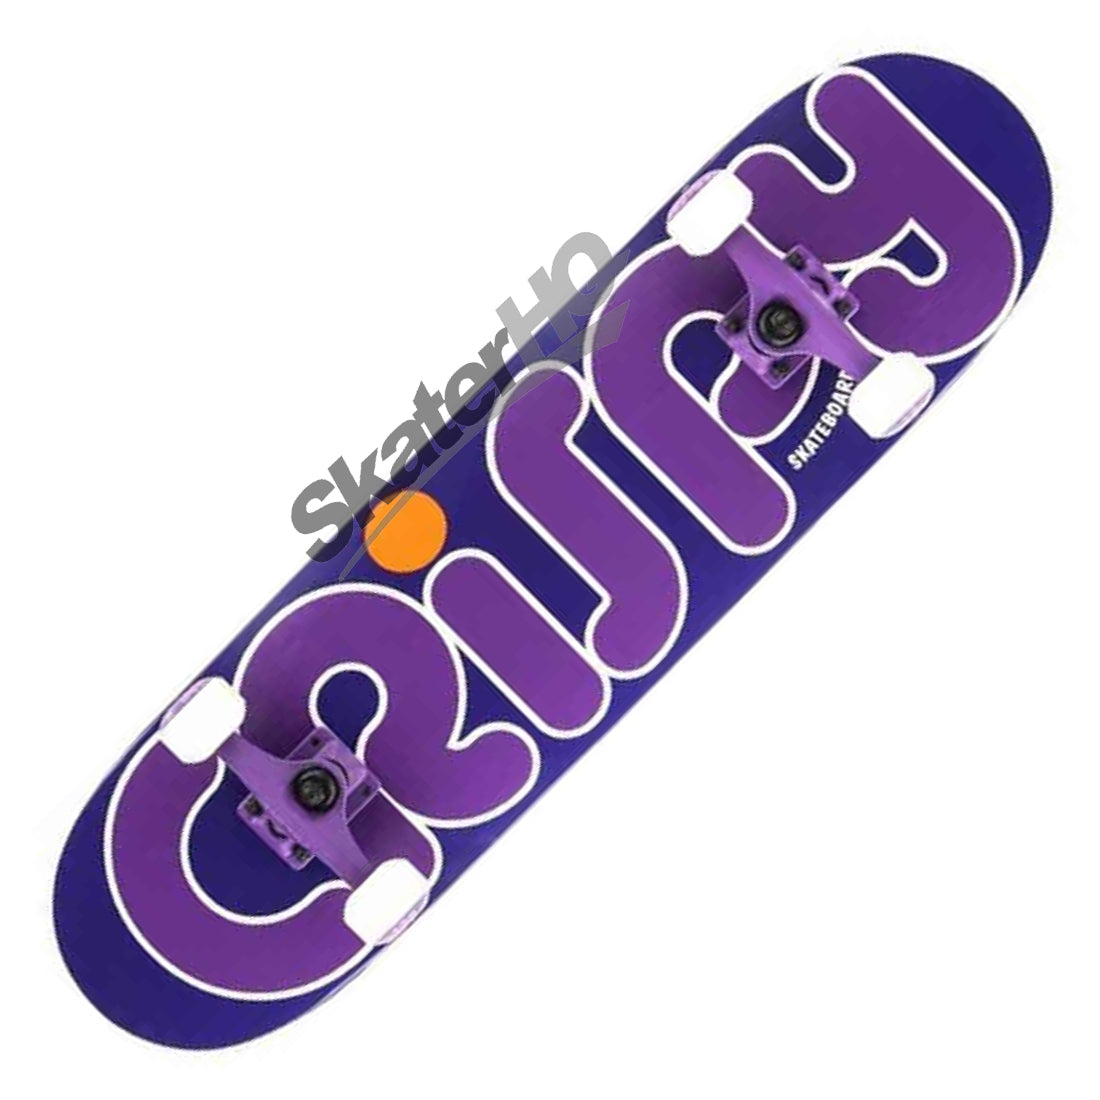 Crispy Rookie 7.75 Complete - Purple Skateboard Completes Modern Street